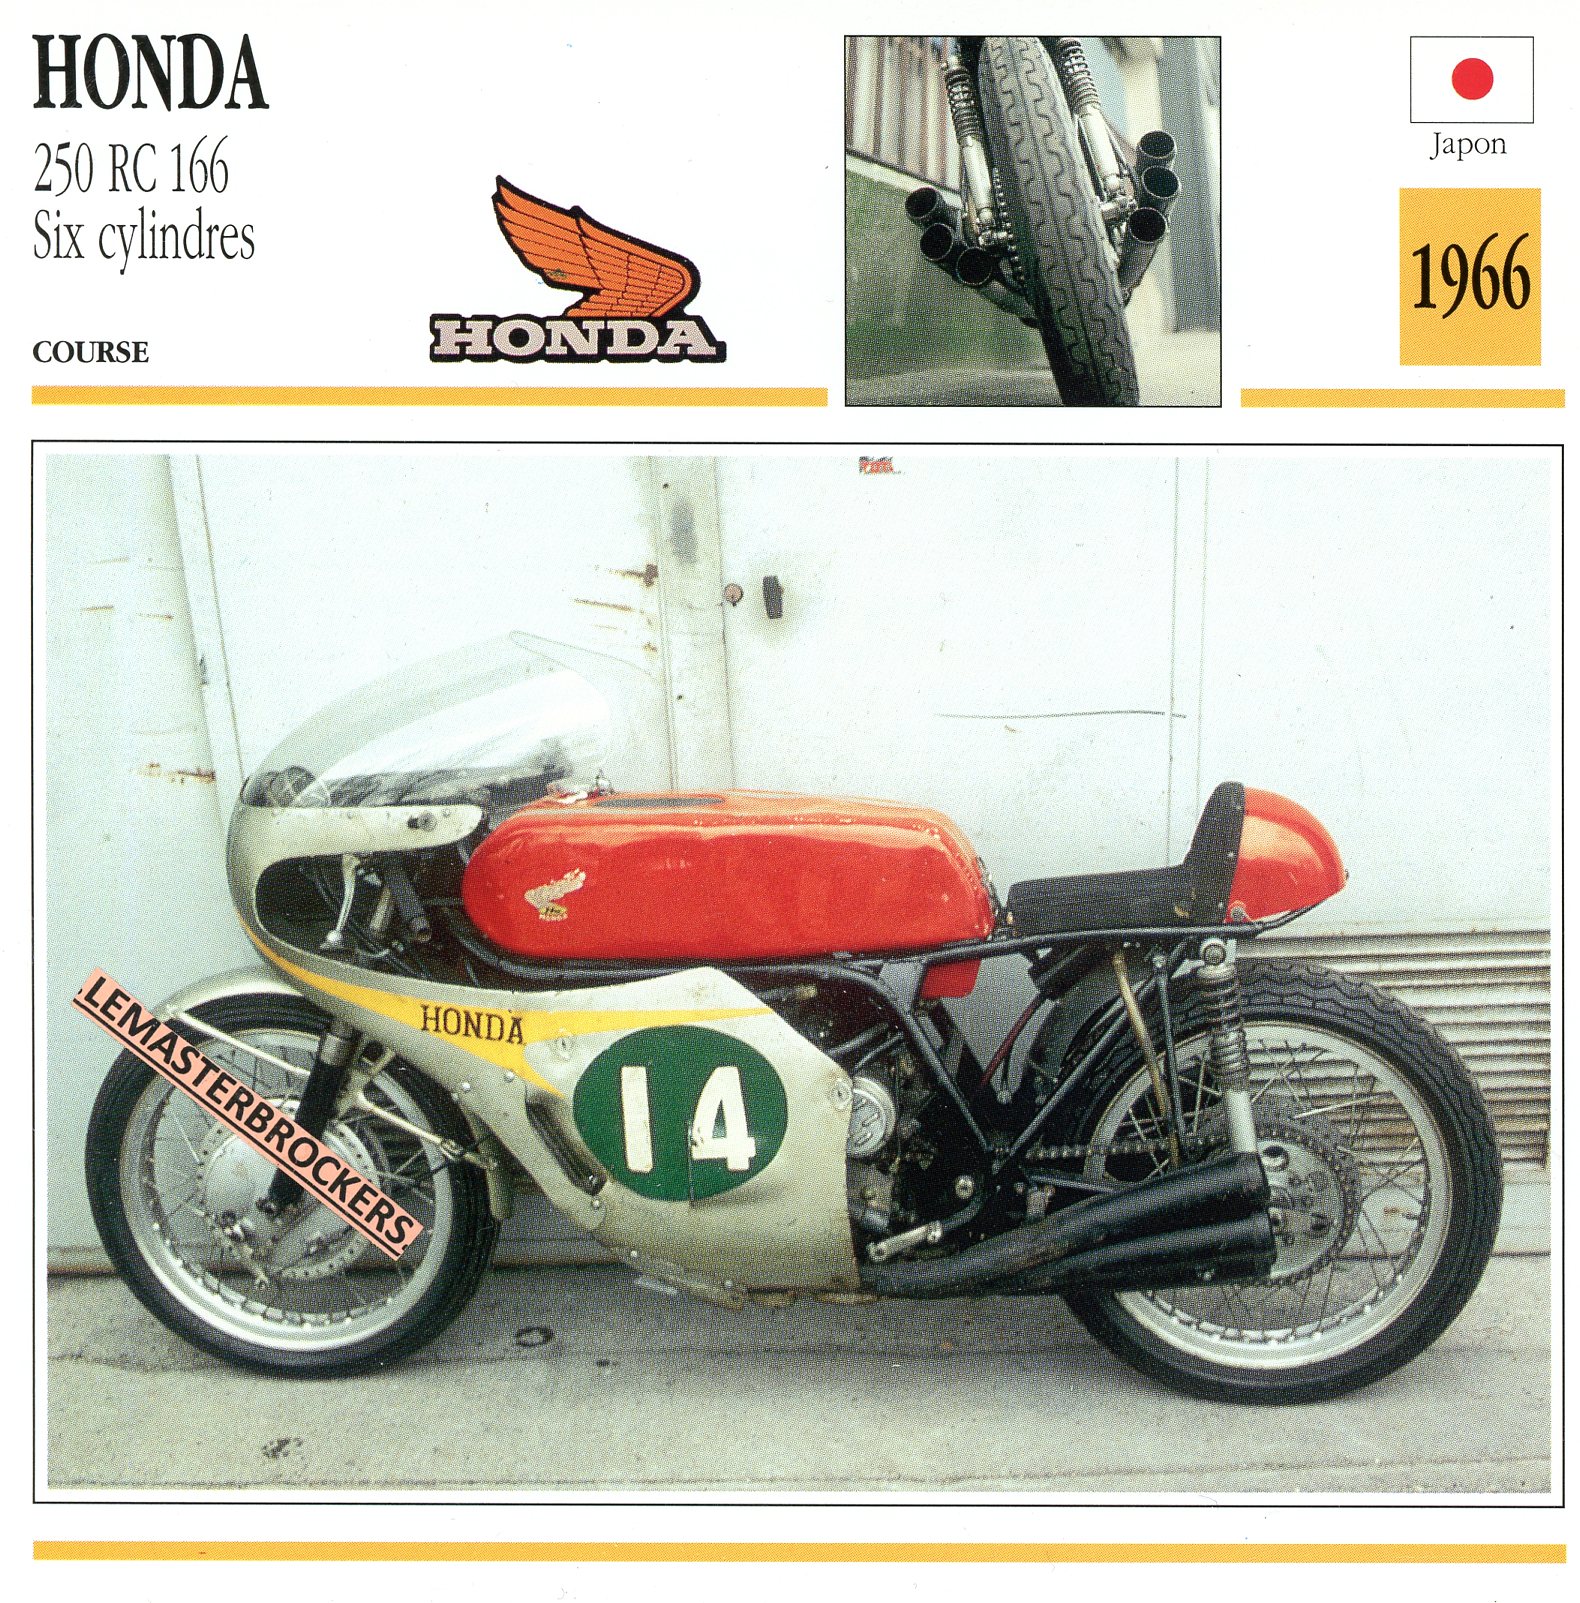 FICHE-MOTO-HONDA-250-RC-166-1966-LEMASTERBROCKERS-CARS-MOTORCYCLE